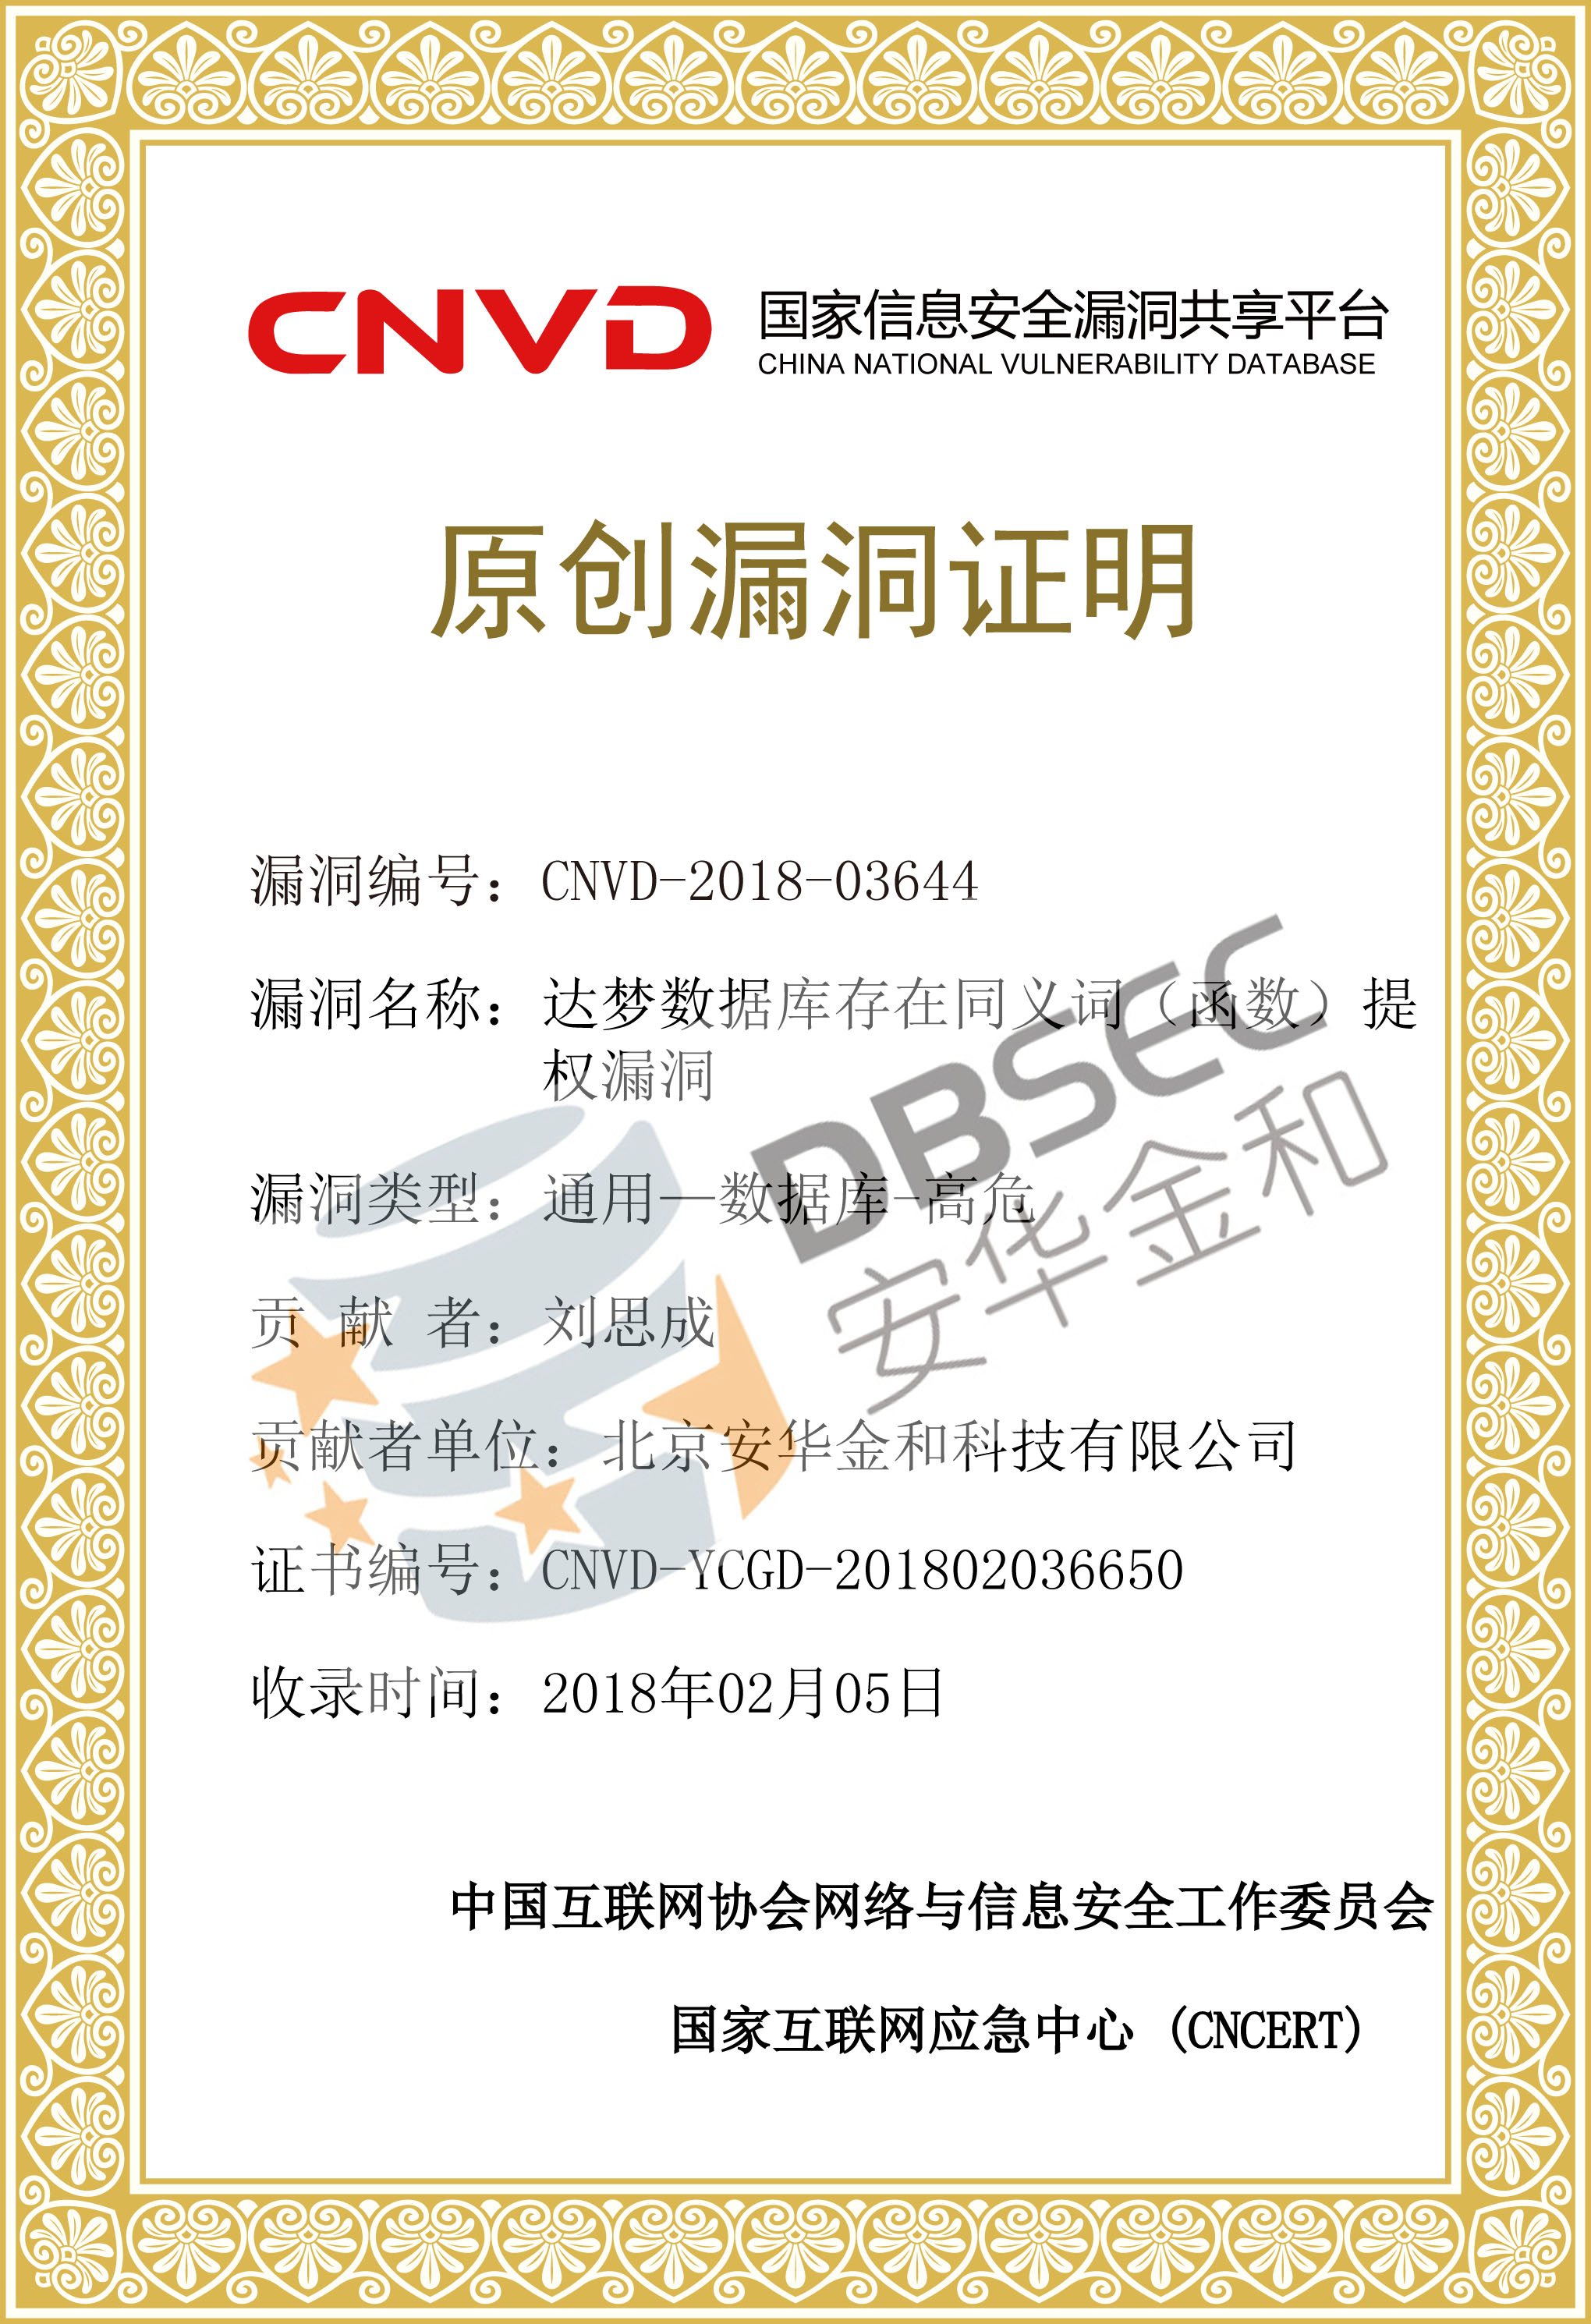 CNVD-YCGD-201802036650